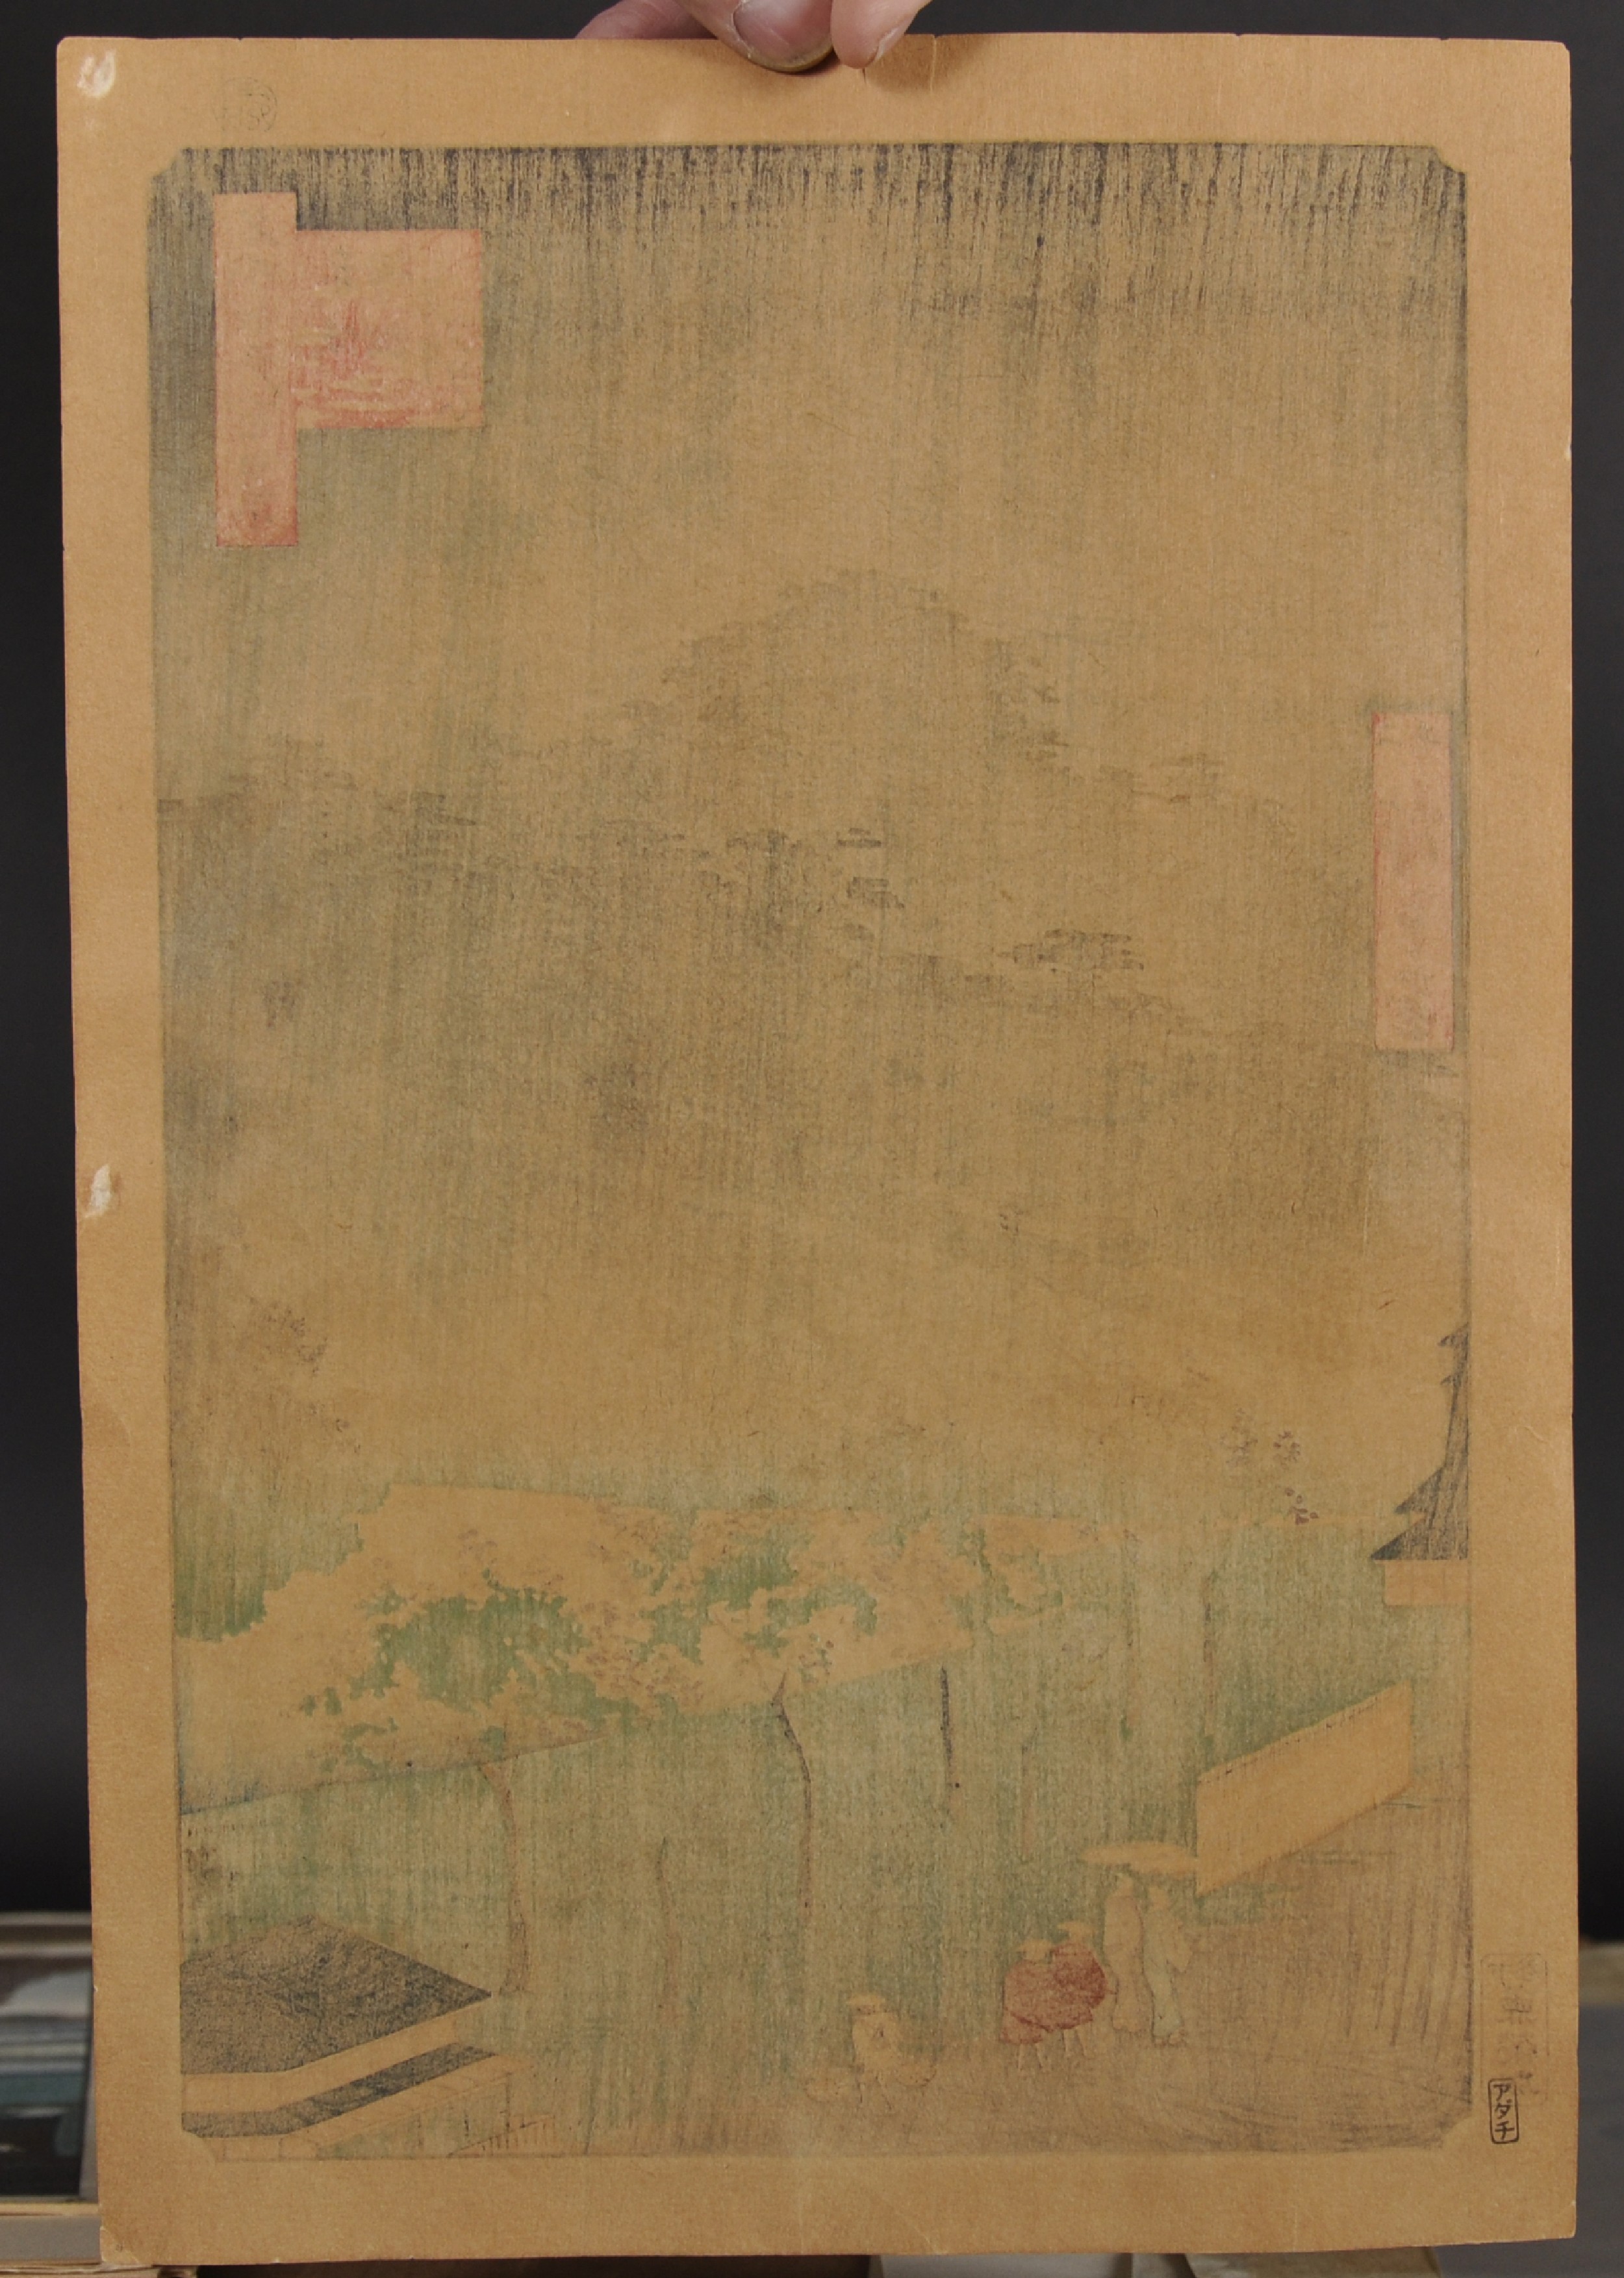 Hiroshige Utagawa (Ando) (1797-1858) Japanese. "Akasaka", Woodblock, Unframed, 13.25" x 8.5". - Image 3 of 3